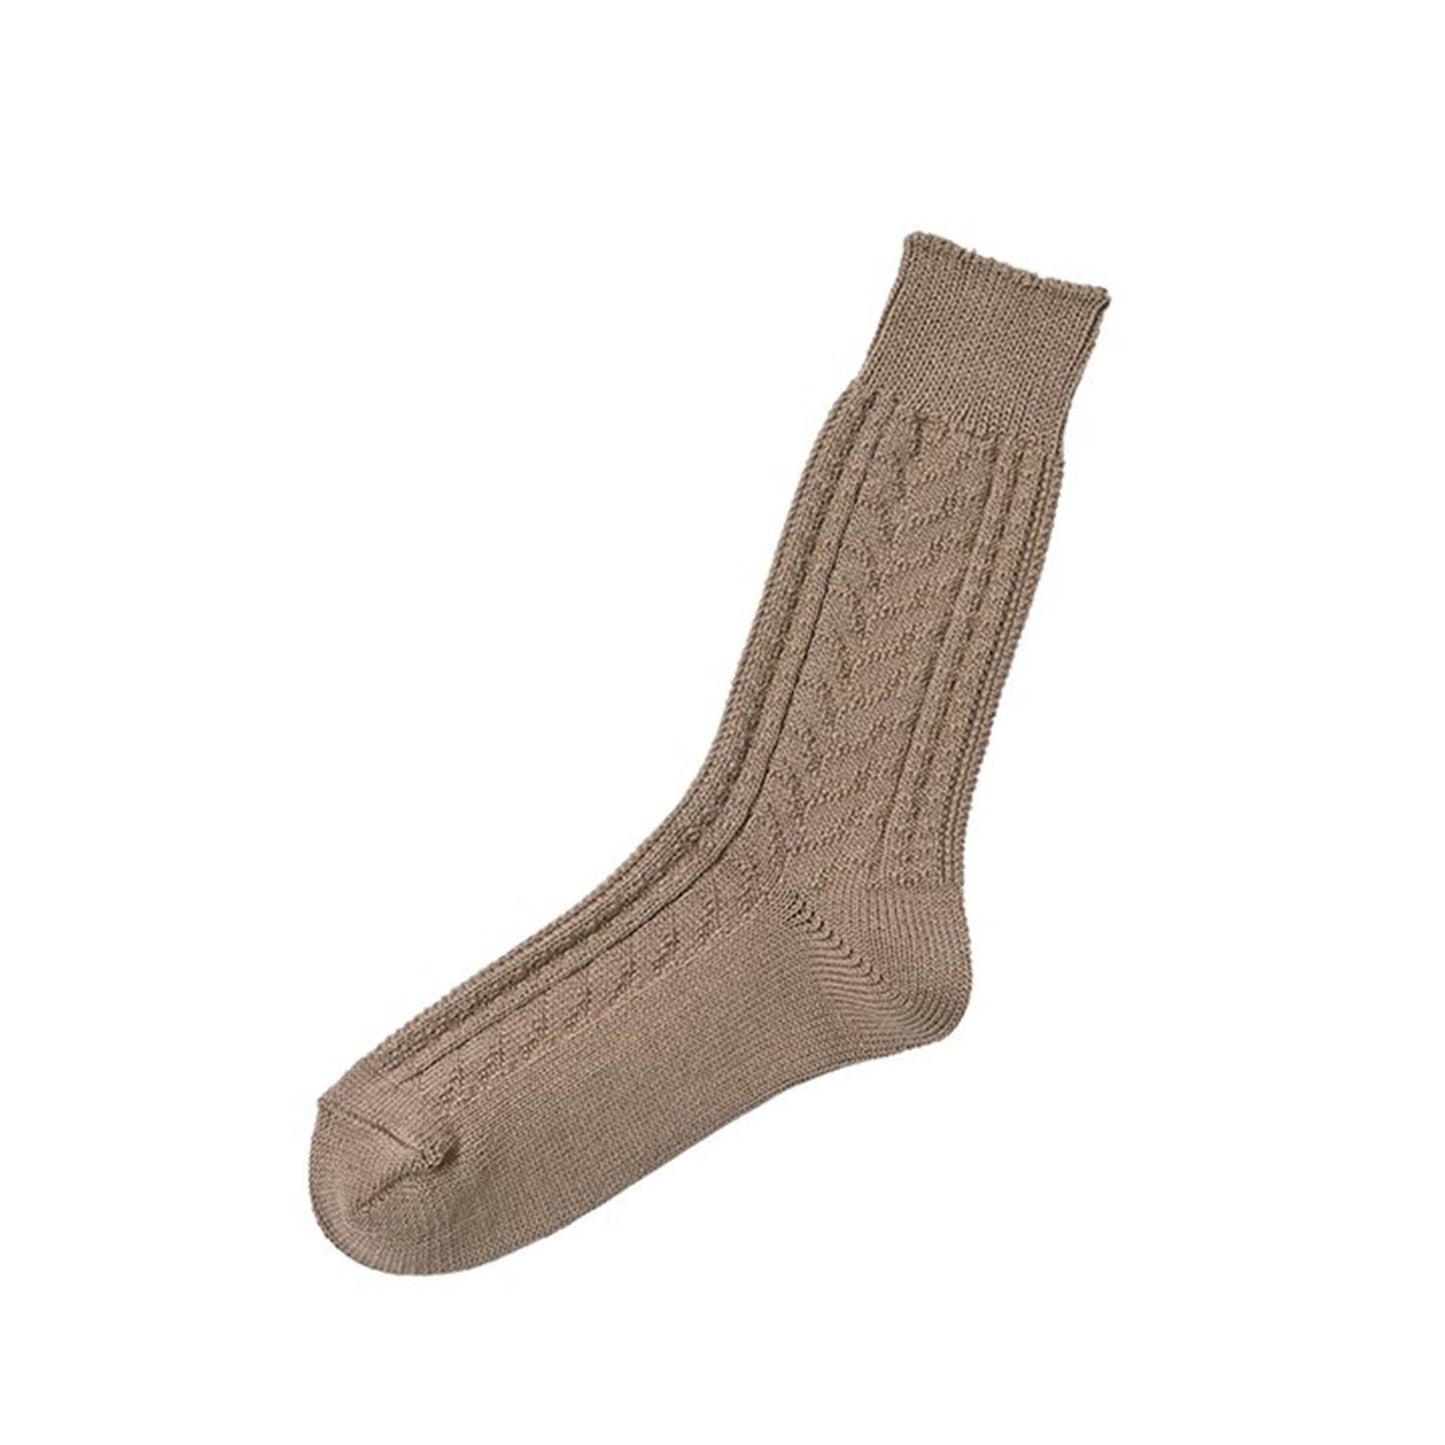 Memeri Wool Cotton Cable Socks, Charcoal